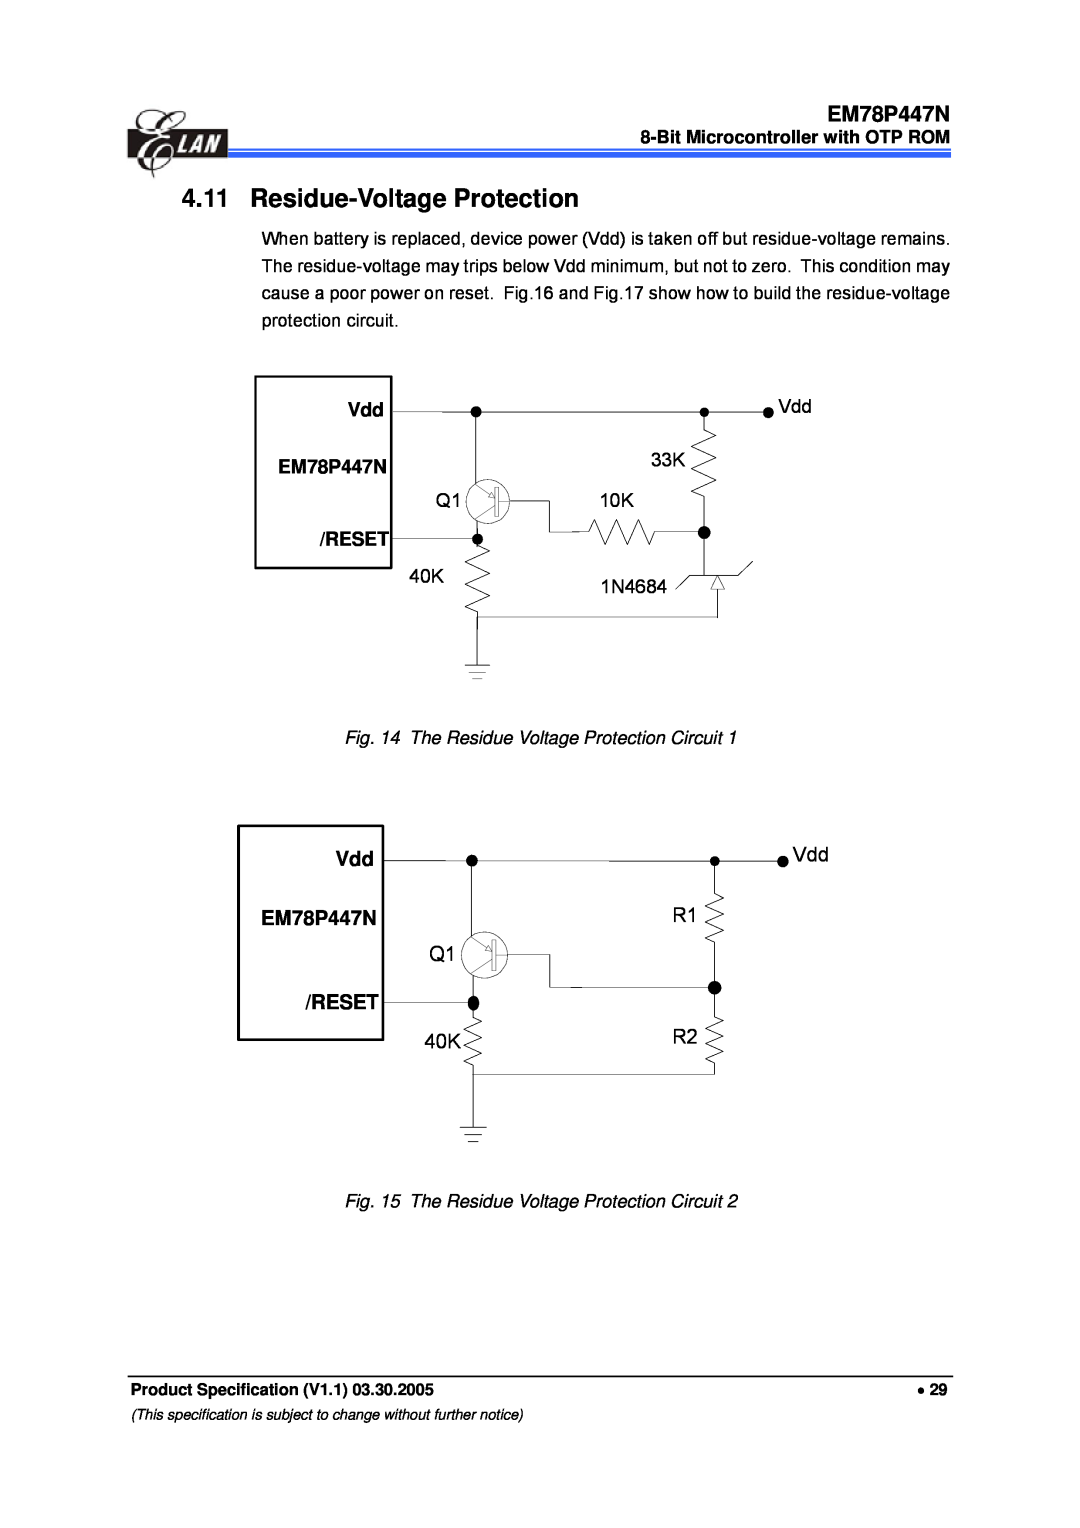 IBM manual Residue-Voltage Protection, Vdd EM78P447N RESET, Vdd R1 Q1 40KR2, Vdd 33K, 40K1N4684 